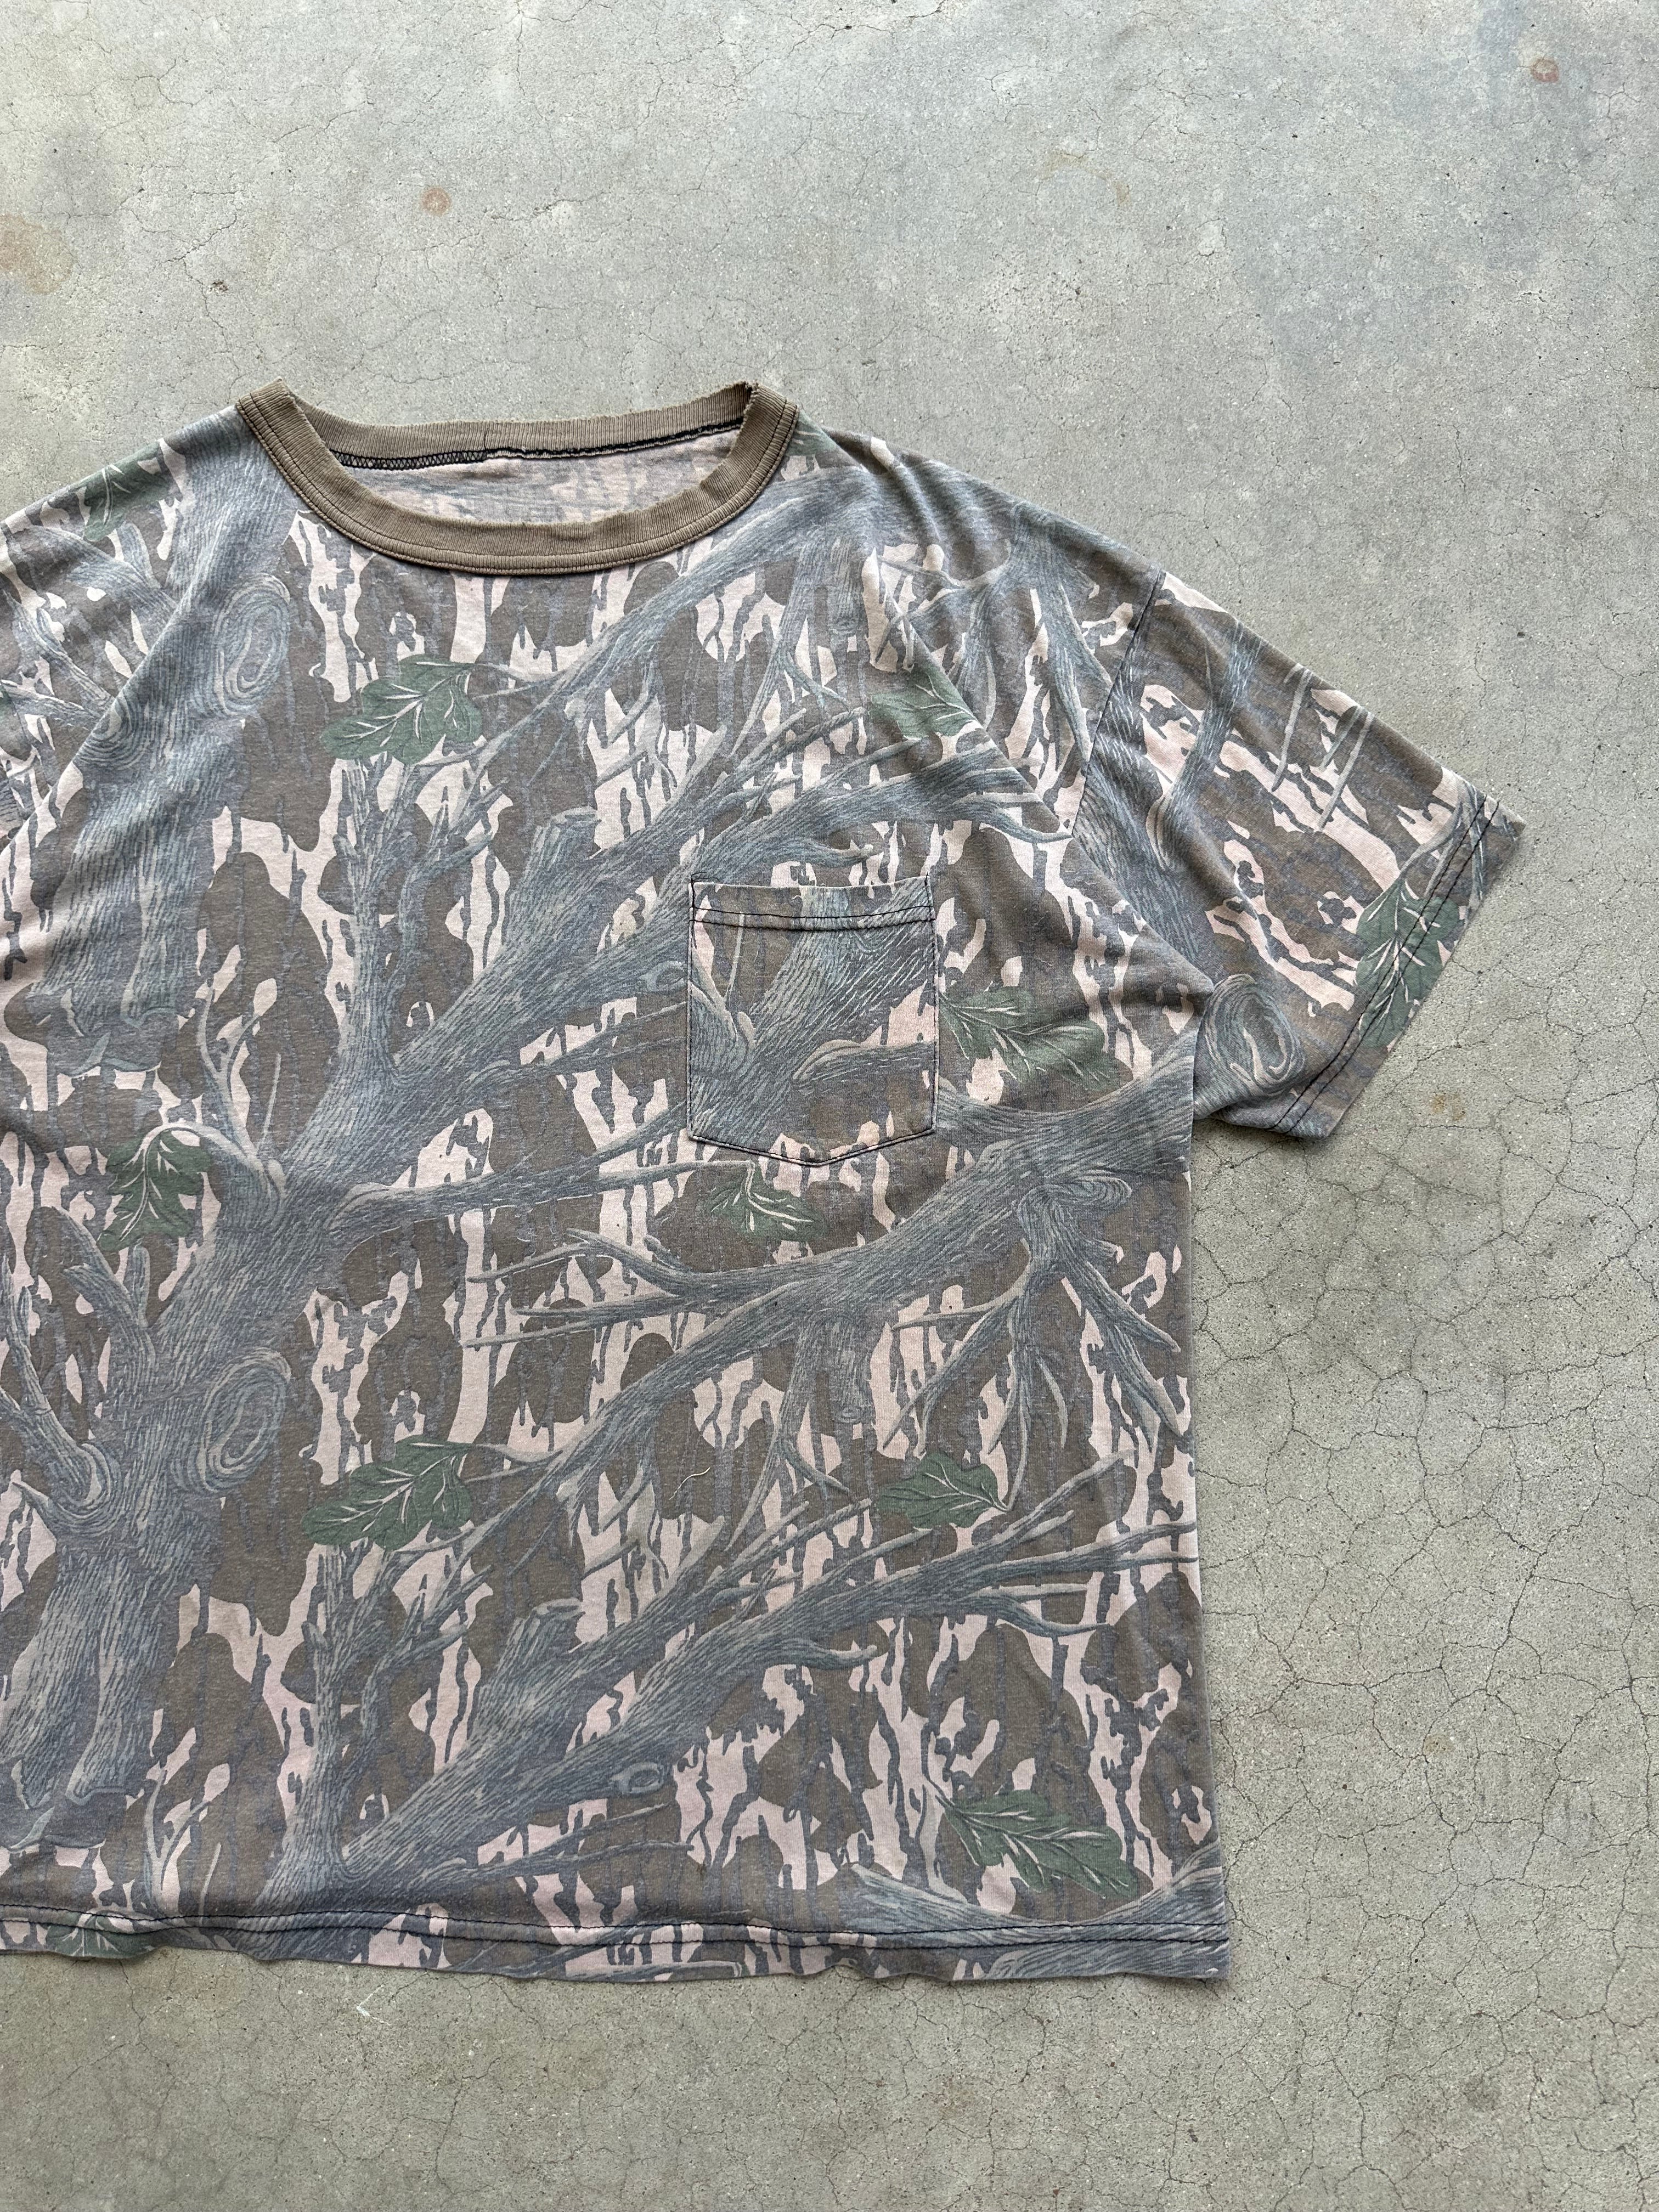 1990s Faded/Distressed Mossy Oak Treestand Camo T-Shirt